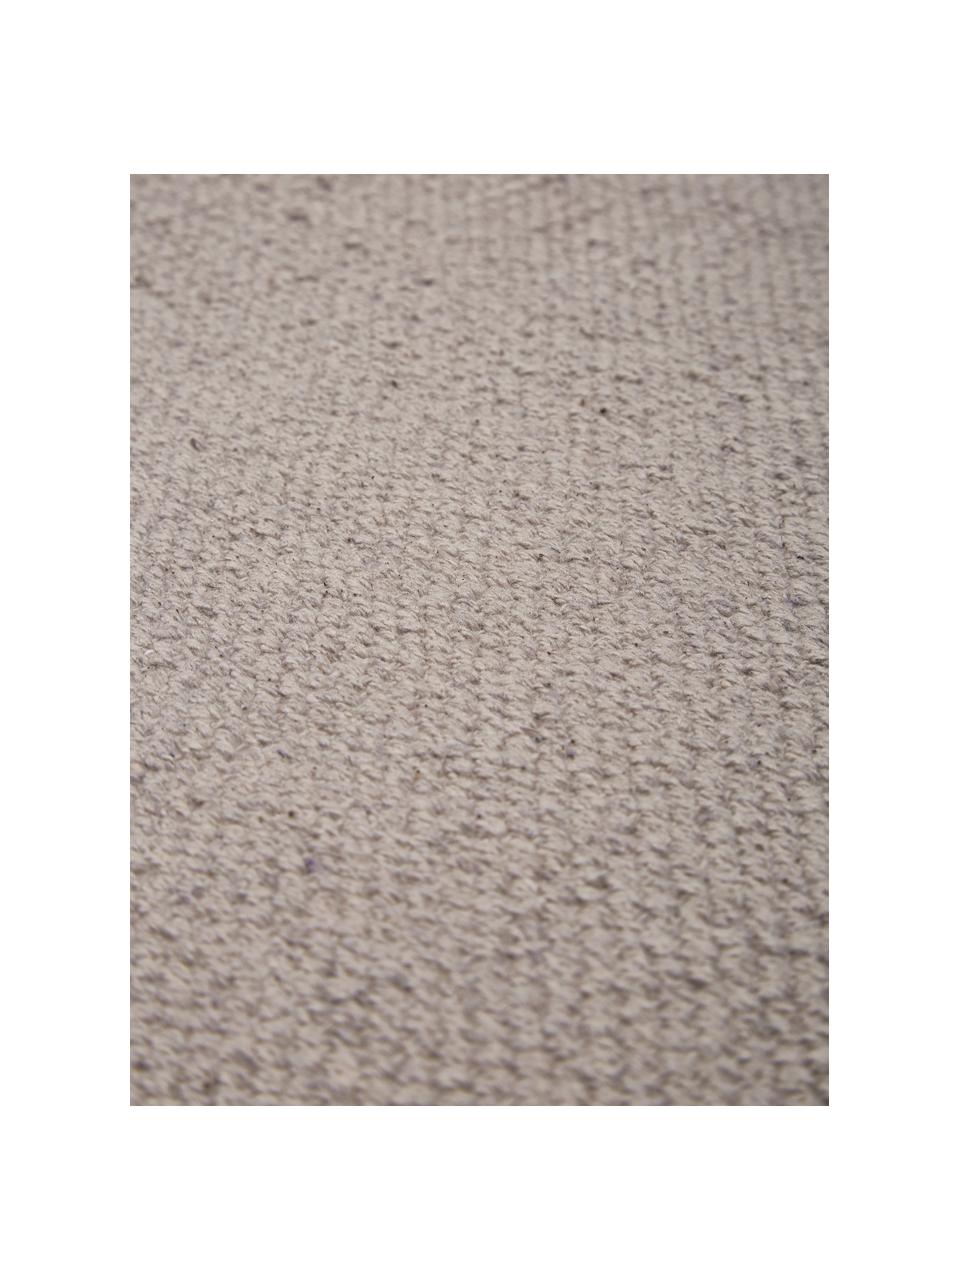 Dünner Baumwollteppich Agneta in Grau, handgewebt, 100% Baumwolle, Grau, B 120 x L 180 cm (Größe S)